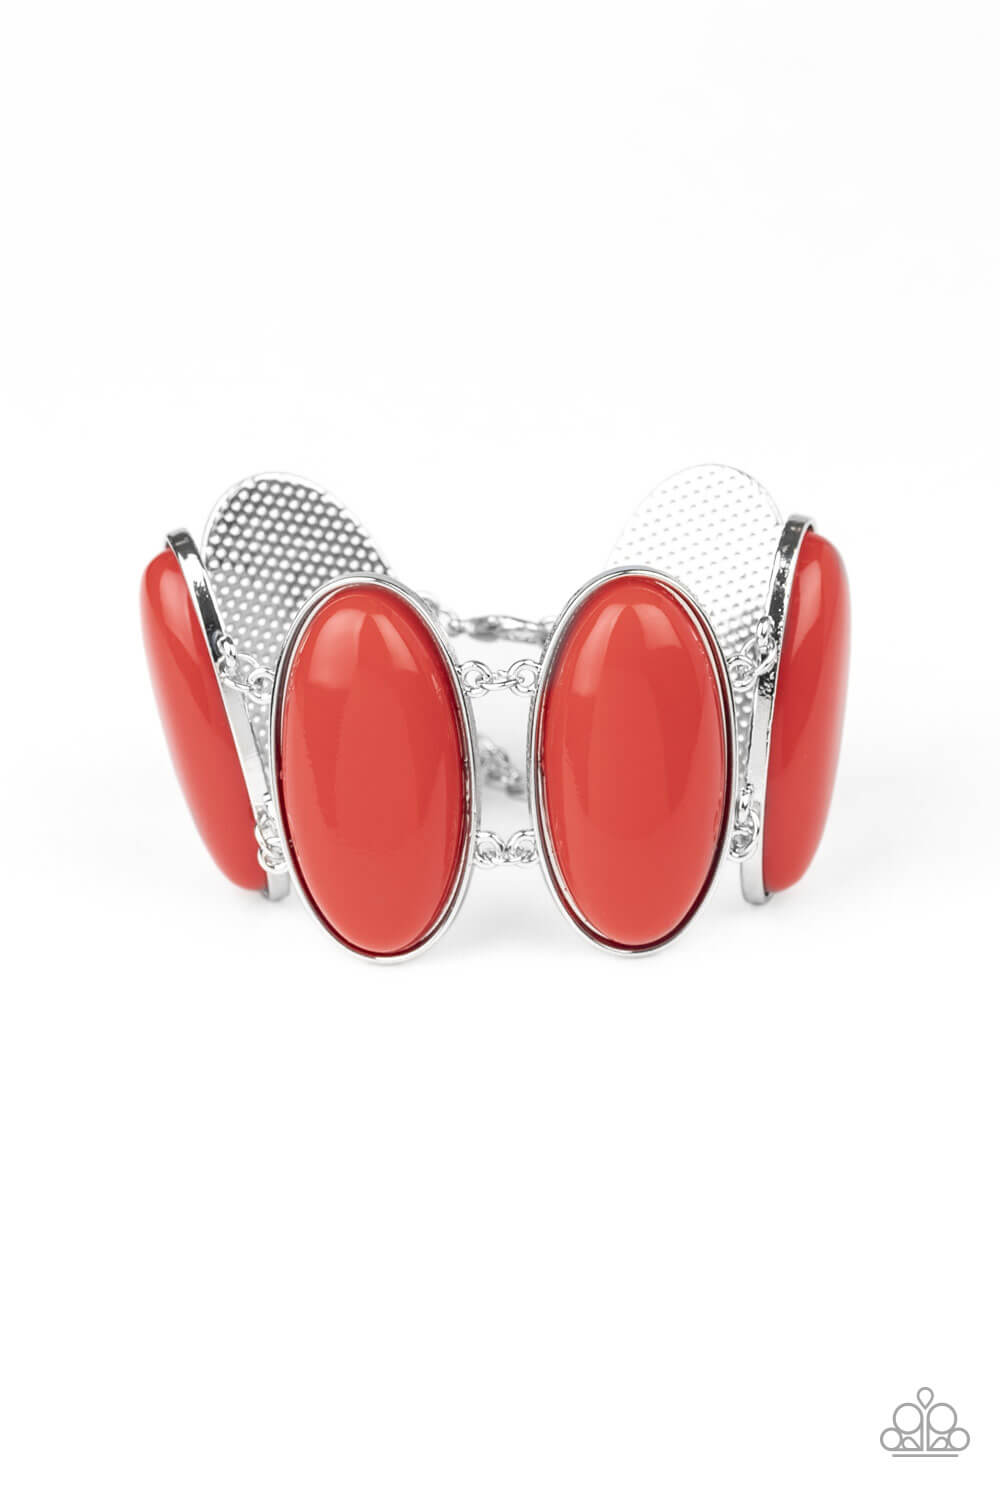 Power Pop - Red Bracelet - Princess Glam Shop